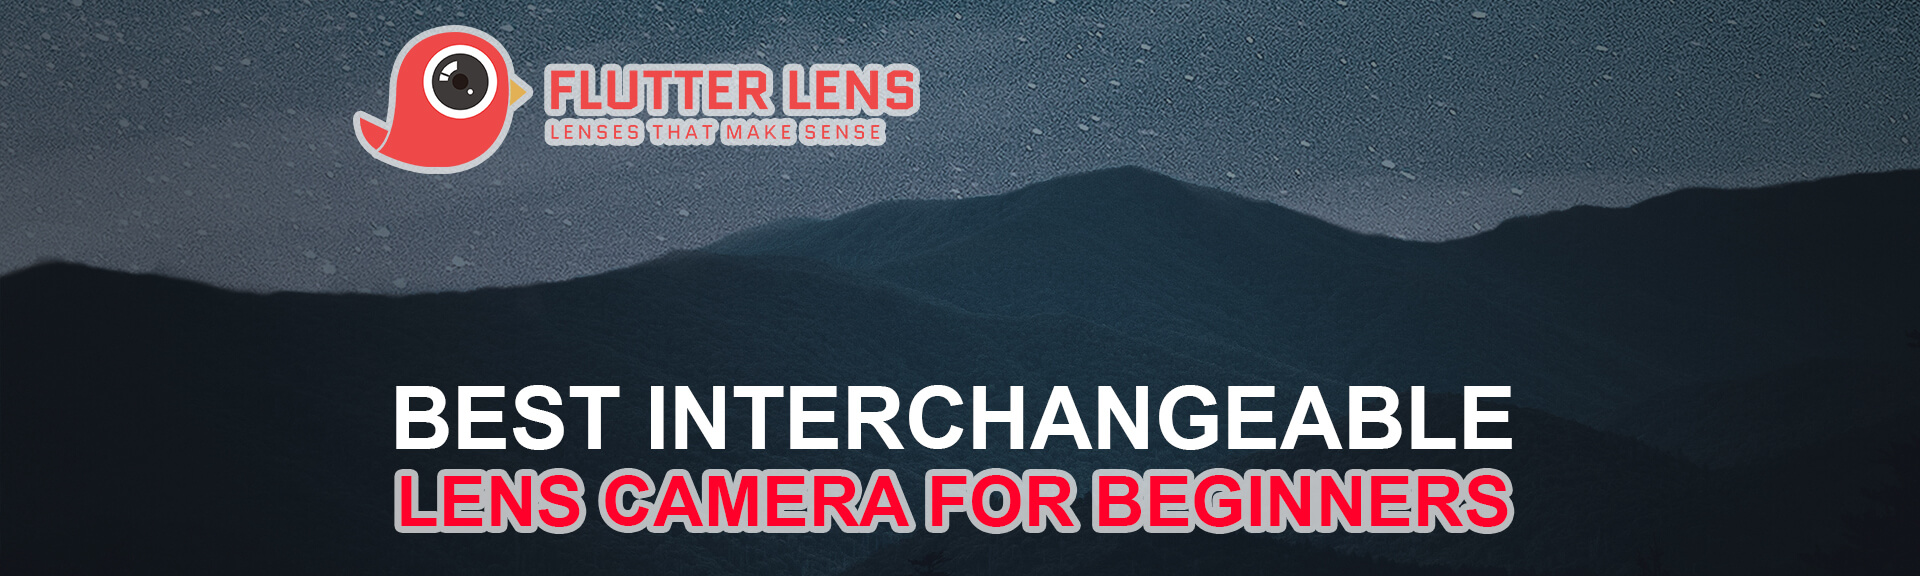 best interchangeable lens camera for beginners